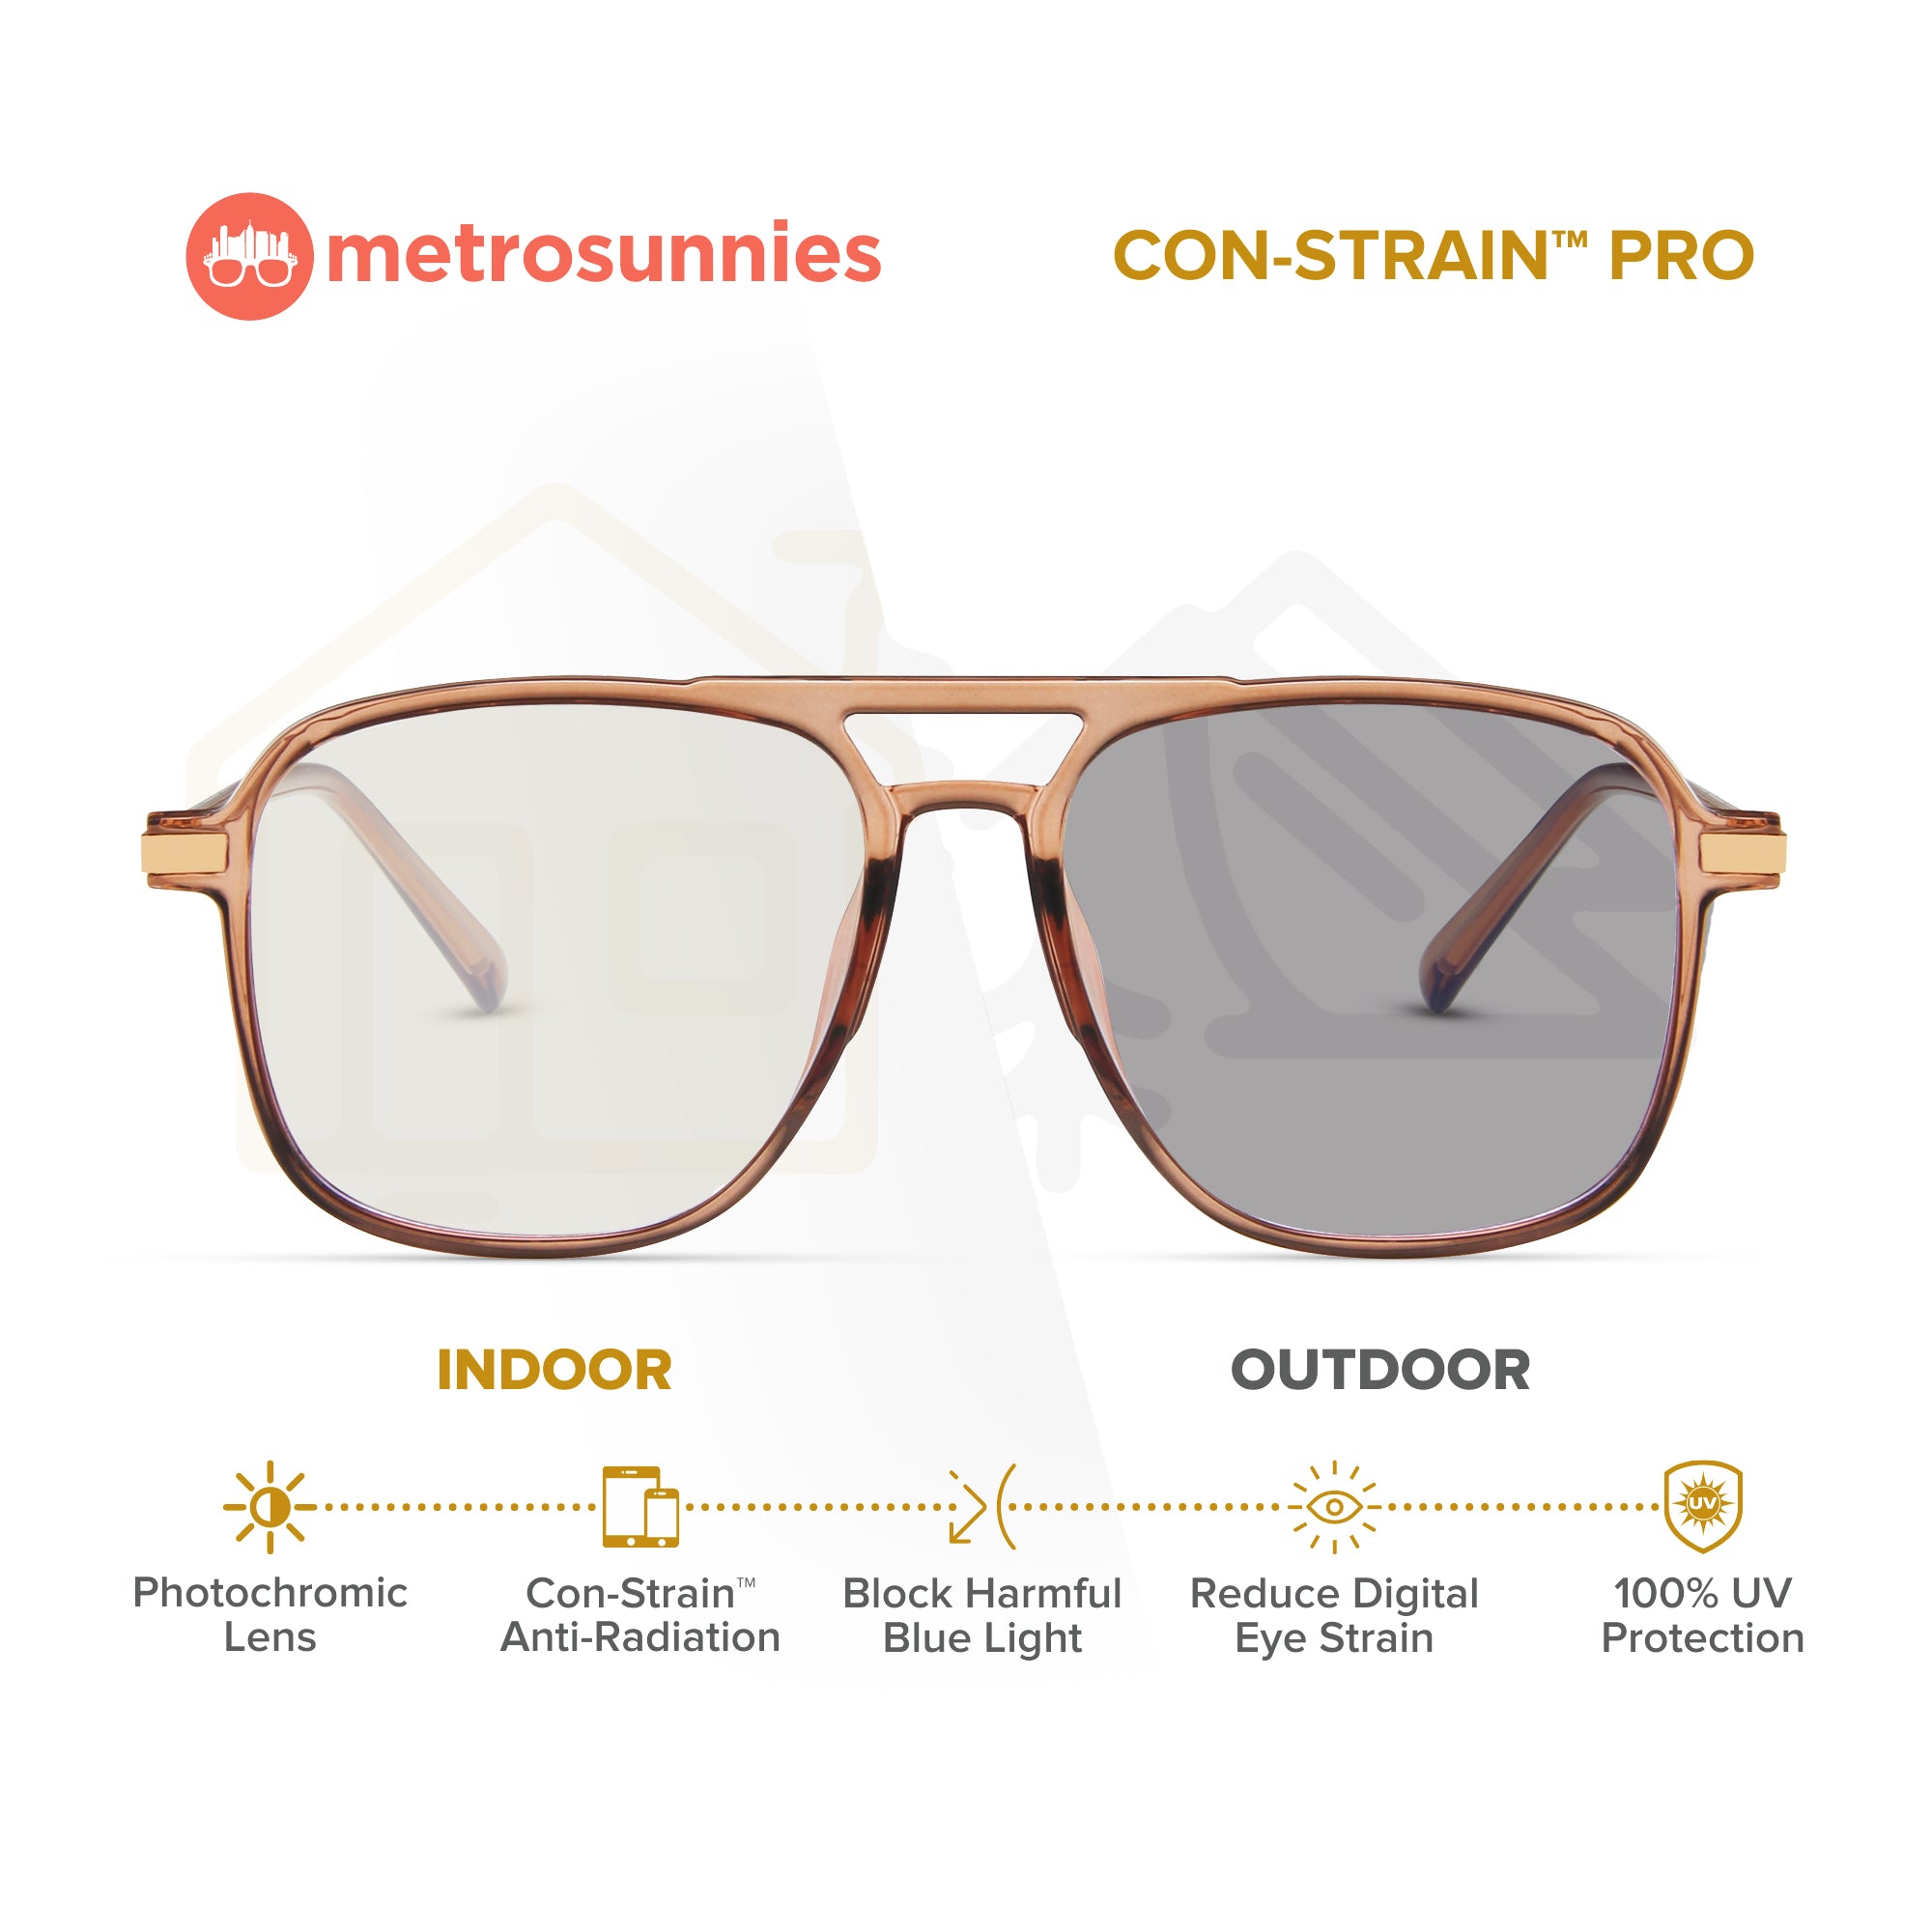 MetroSunnies Paul Specs (Champagne) / Con-Strain Blue Light / Versairy / Anti-Radiation Eyeglasses